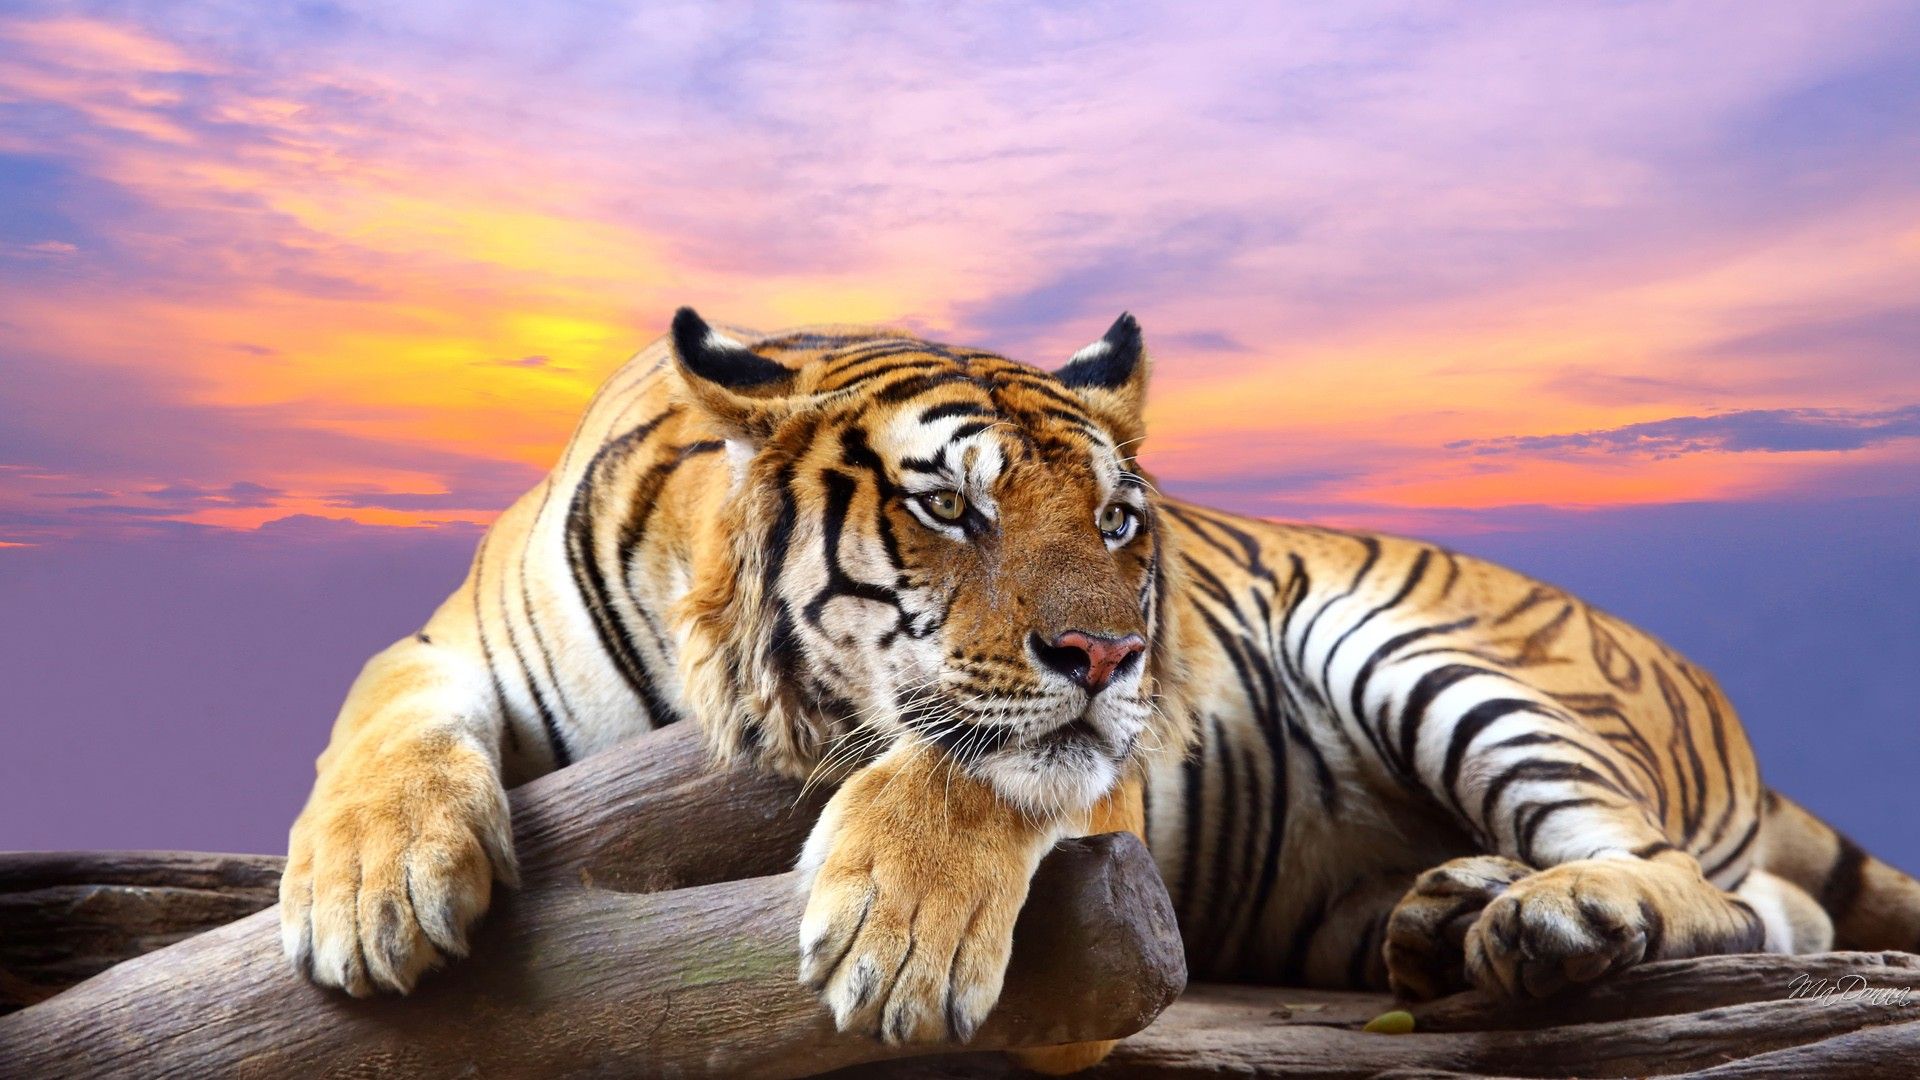 Tiger 100 Full Hd Wallpapers And Best Photos 1080p Fullhdwallpaper Net